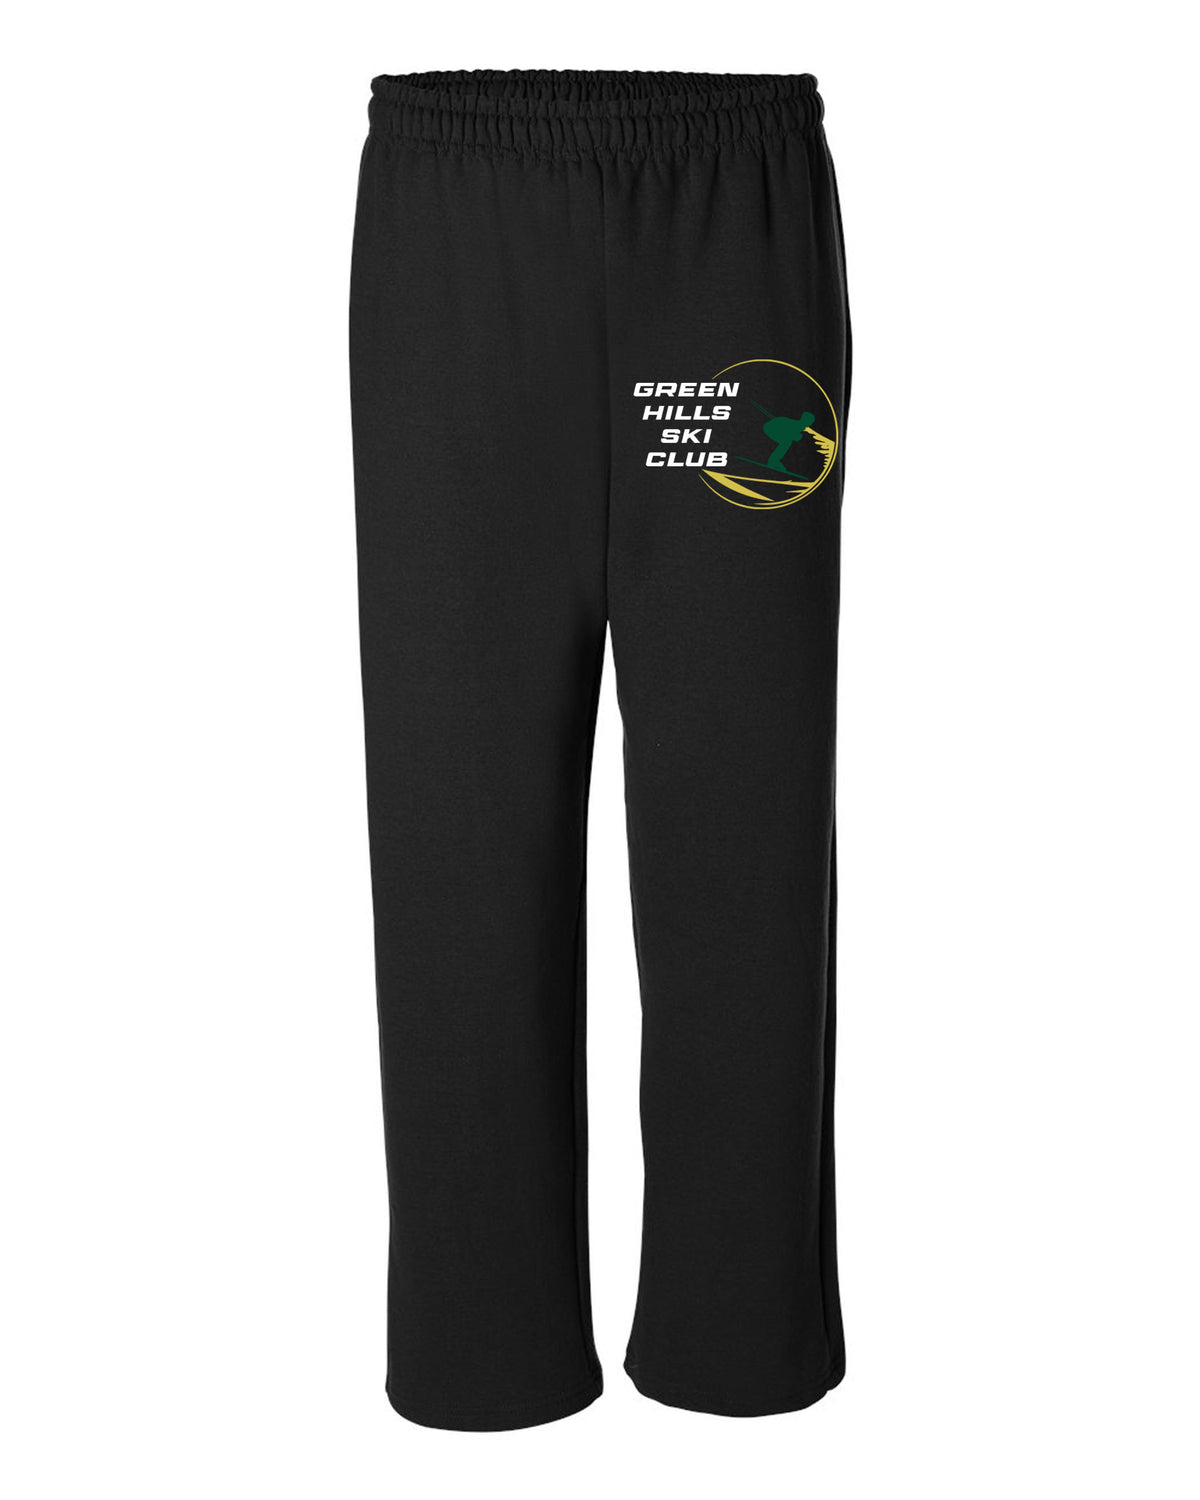 Green Hills Ski Club Design 1 Open Bottom Sweatpants